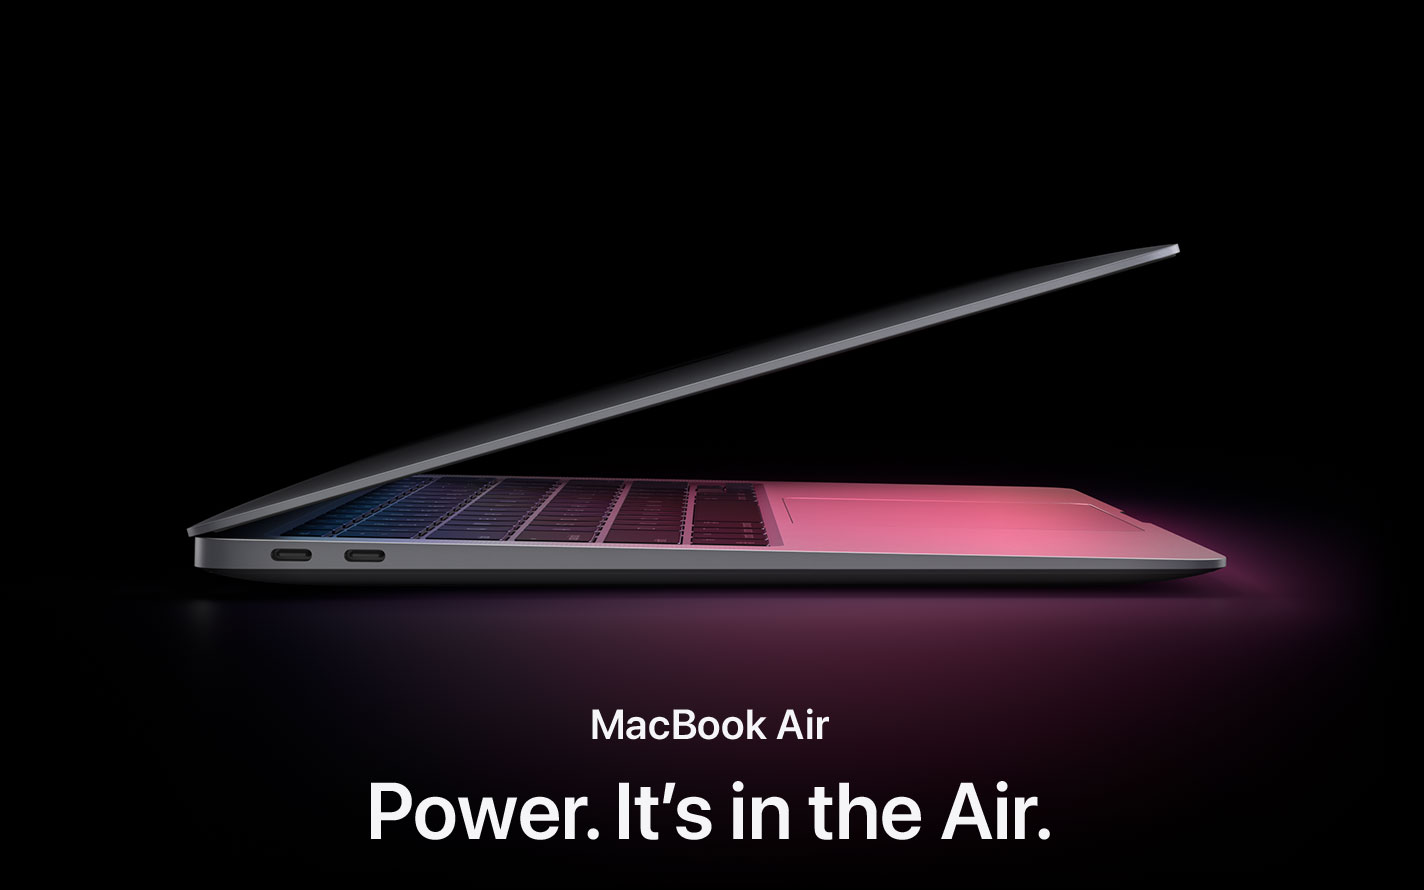 MacBook Air. Power. It's in the Air.